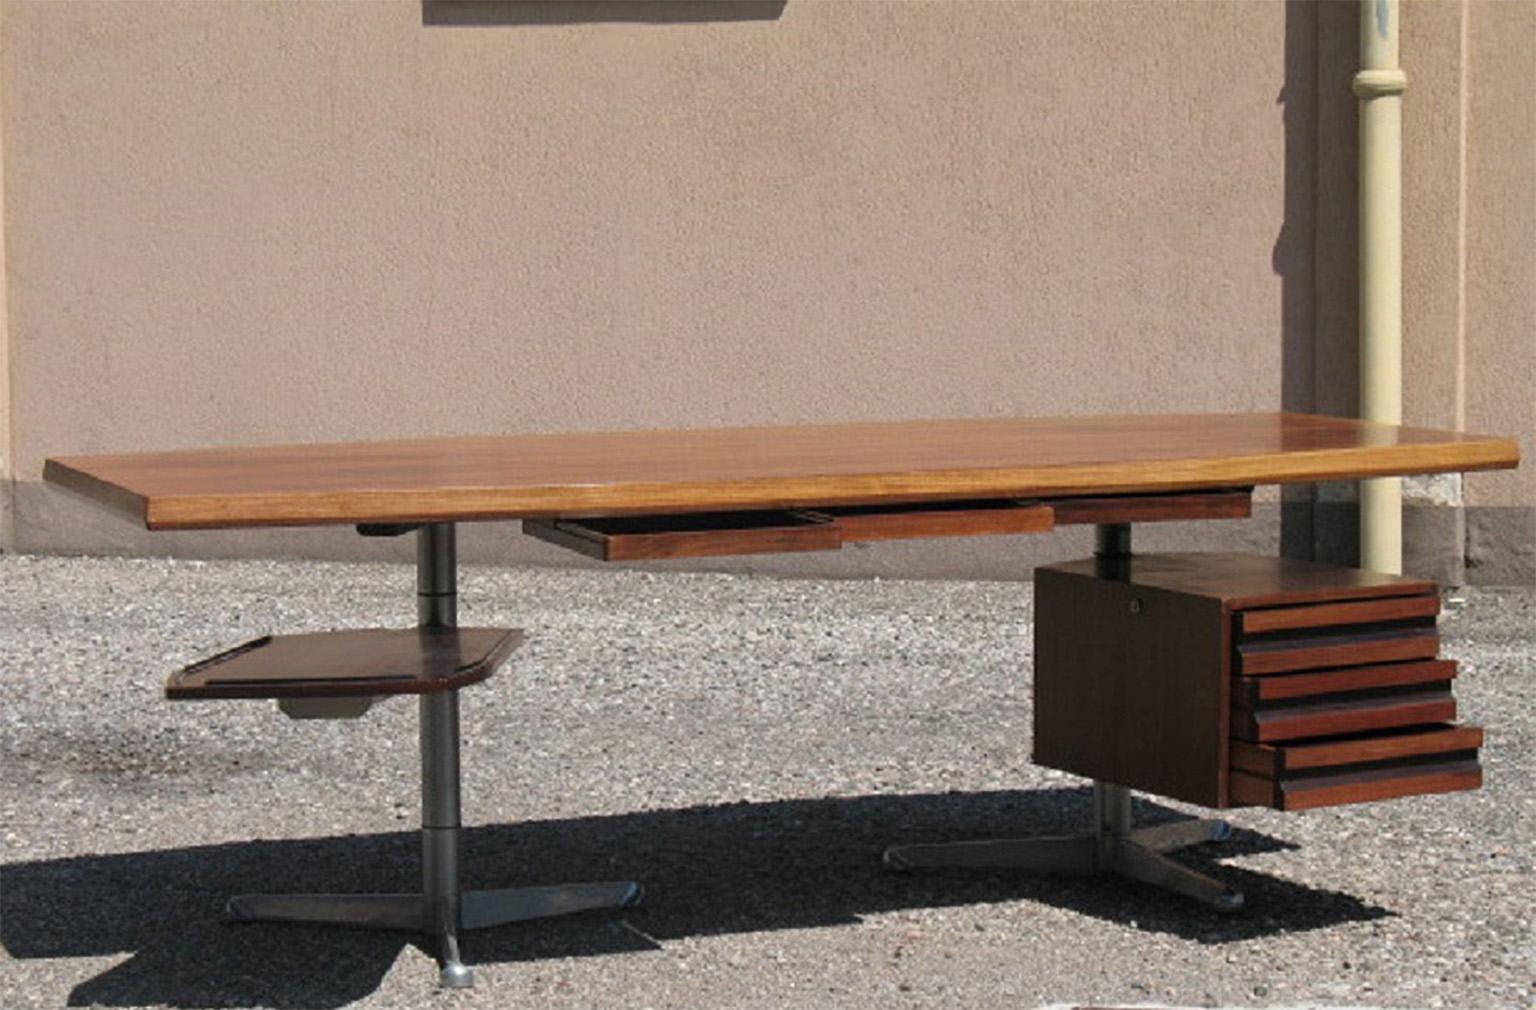 Mid-Century Modern Osvaldo Borsani executive desk for Tecno.
Rosewood top and adjustable shelf on castaluminium feet.

Techno label on the structure.